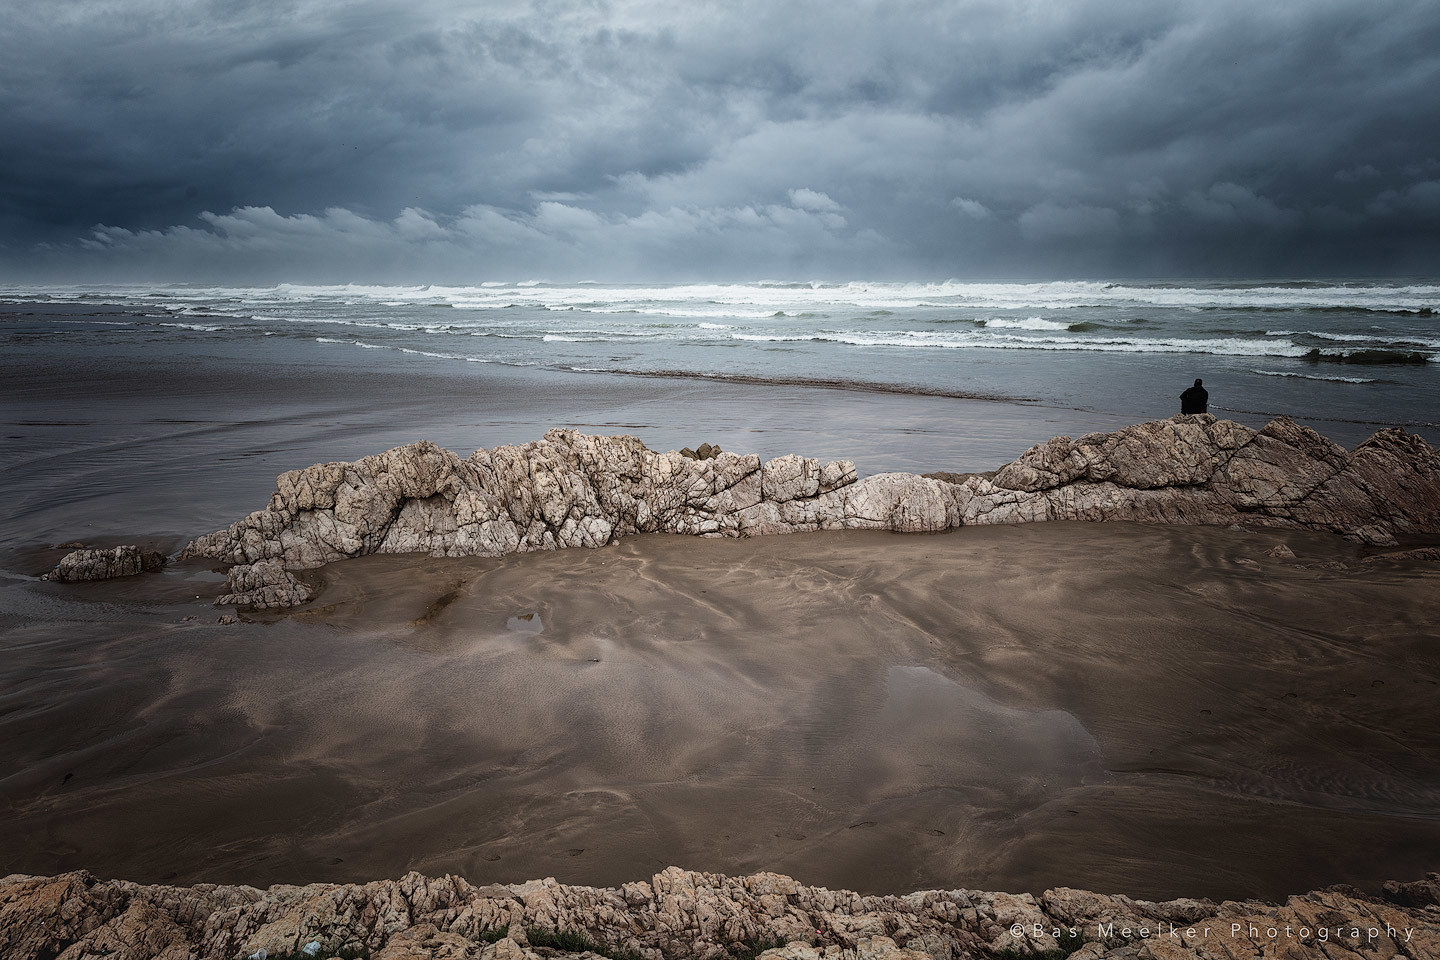 Waiting for the rains - Casablanca beach, Morocco - Canon EOS 5Dsr + Canon EF 24-70mm f/2.8 L II at 24mm, f/9, 1/125 sec. at iso100